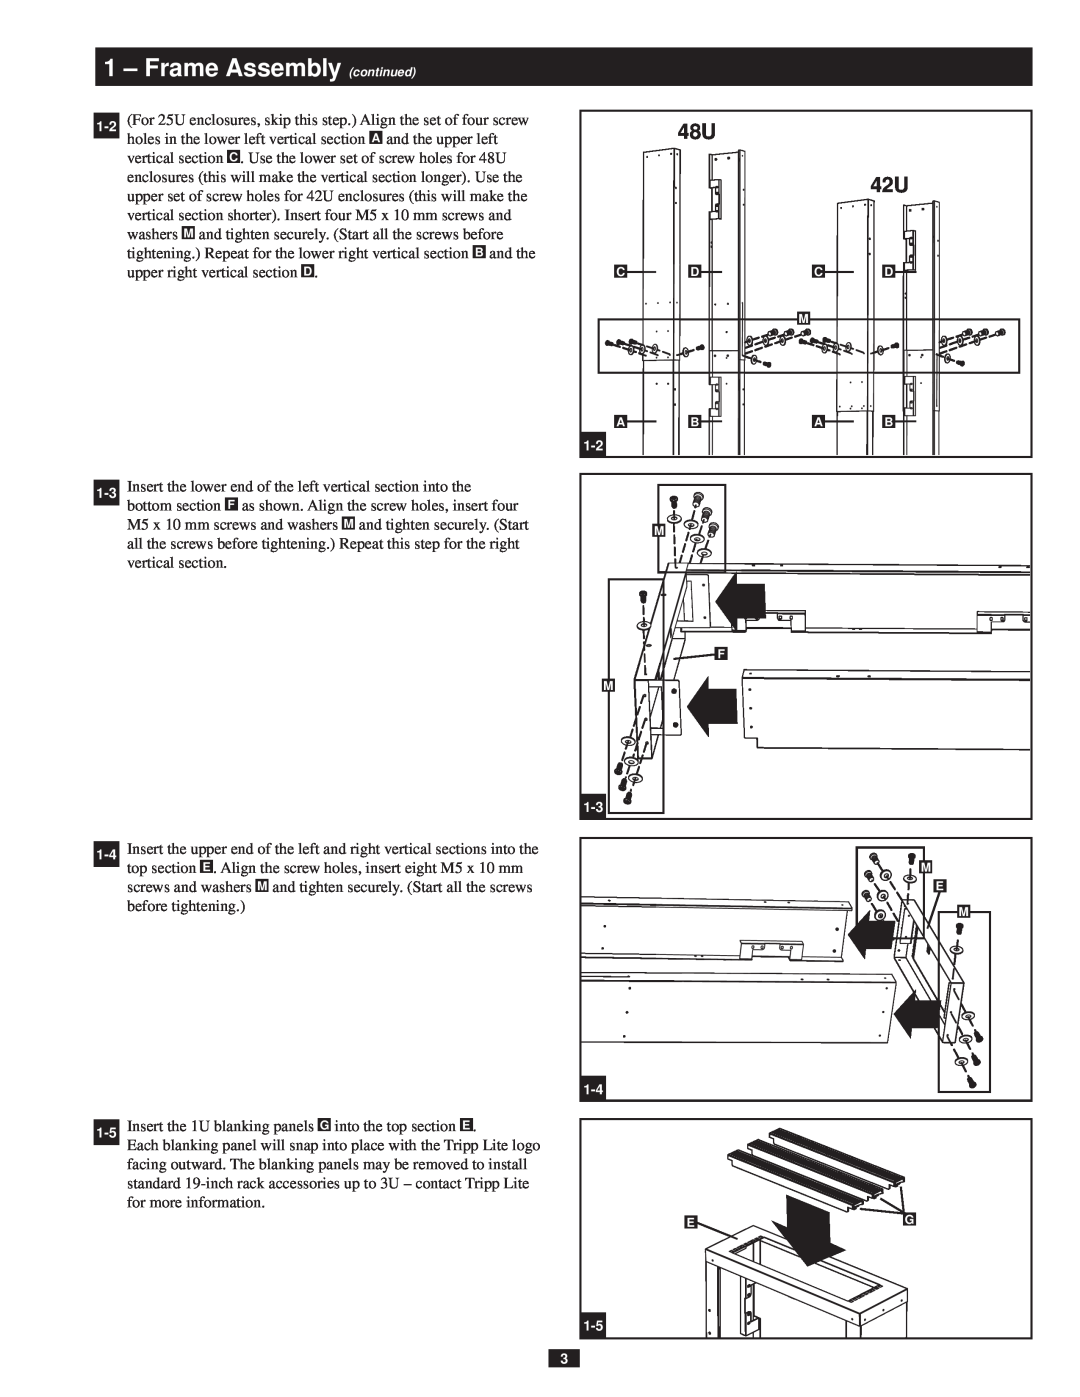 Tripp Lite SREXTENDER owner manual Frame Assembly continued 